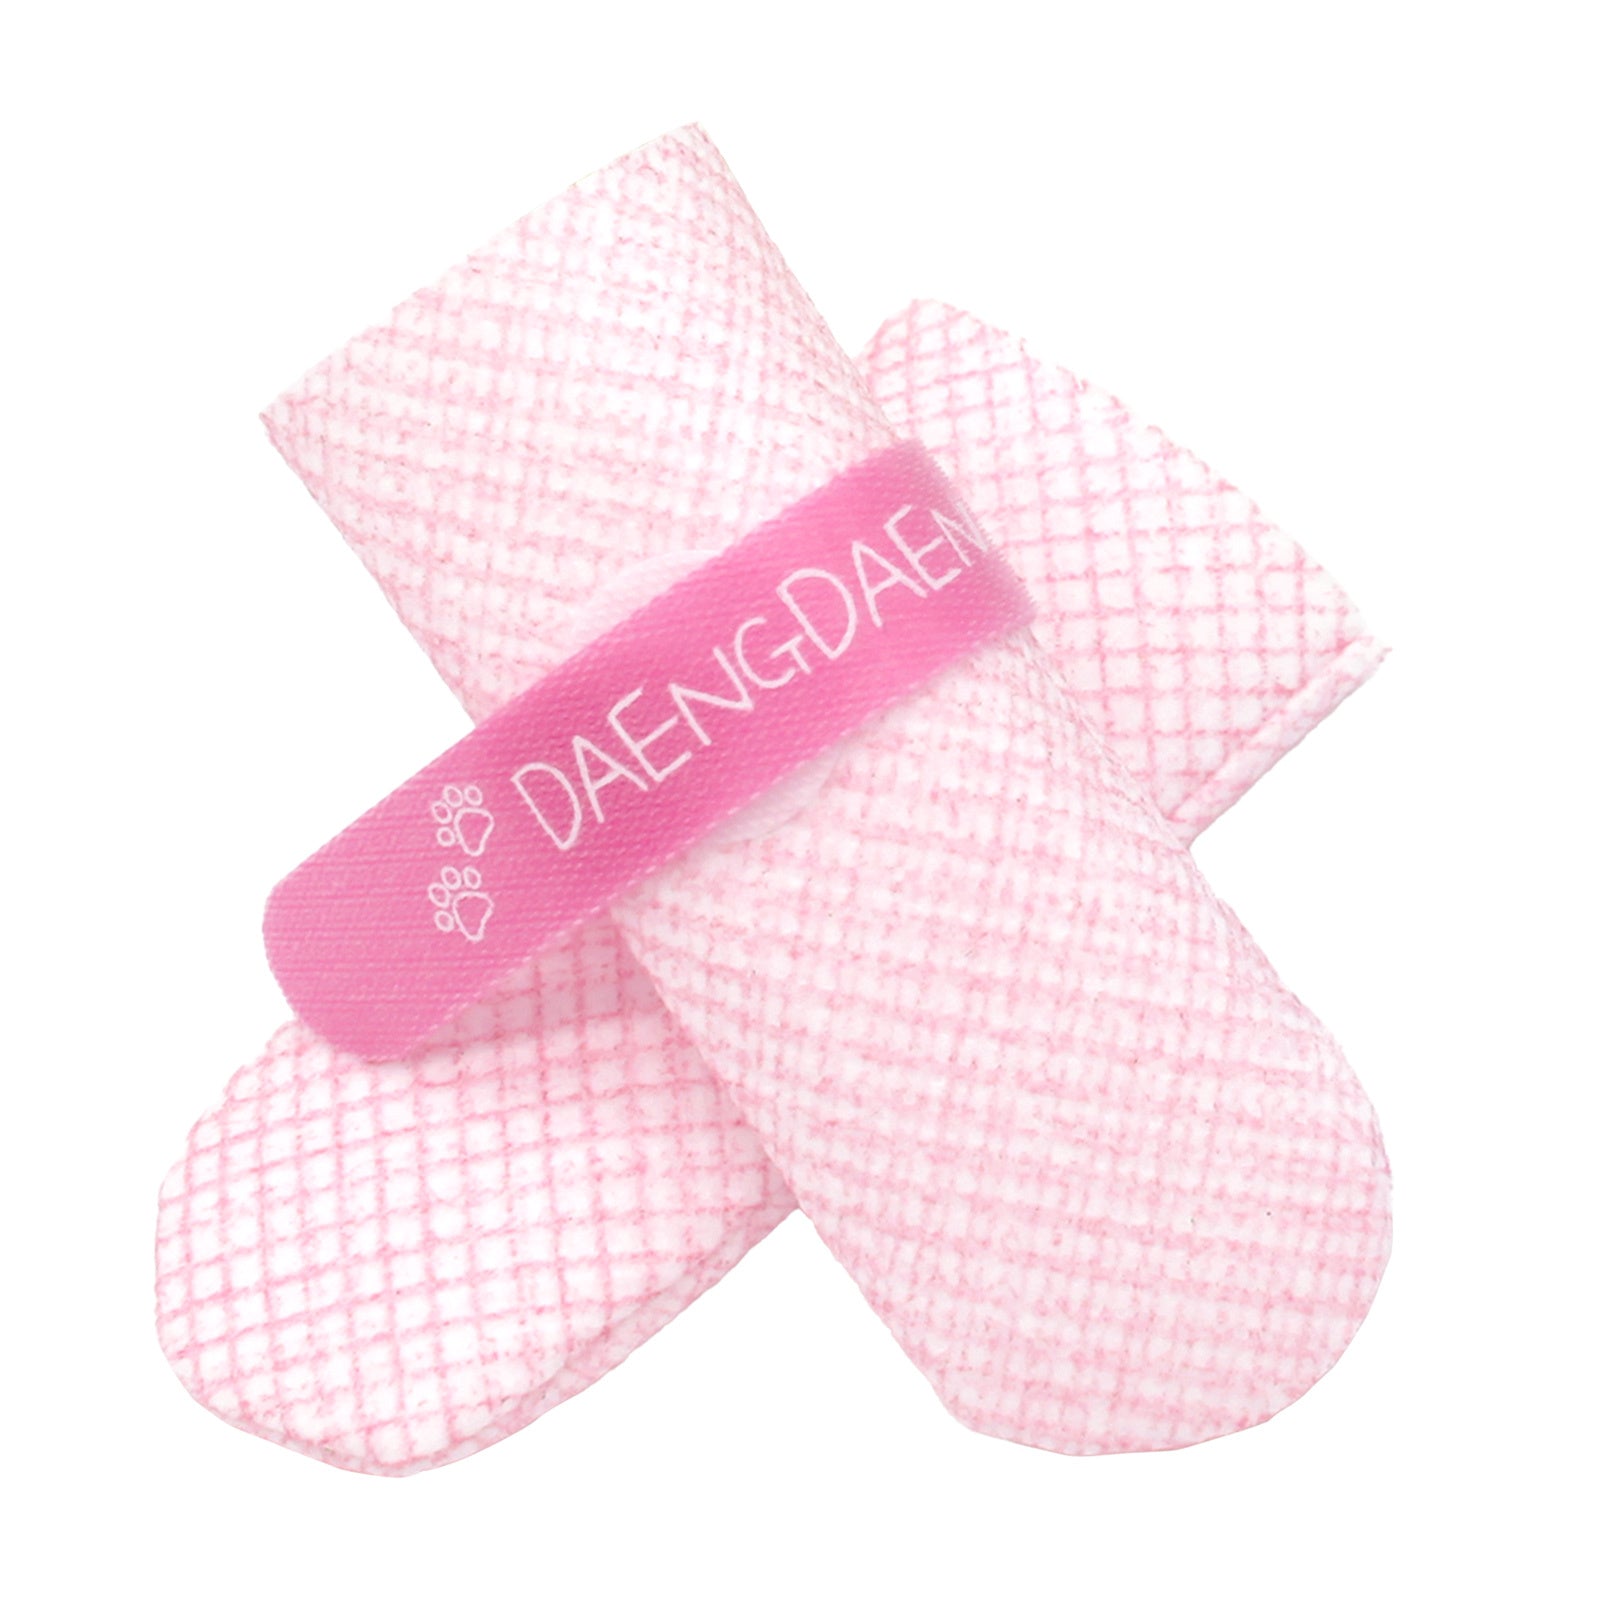 Daeng Daeng Shoes 28pc M Pink Dog Shoes Waterproof Disposable Boots Anti-Slip Socks